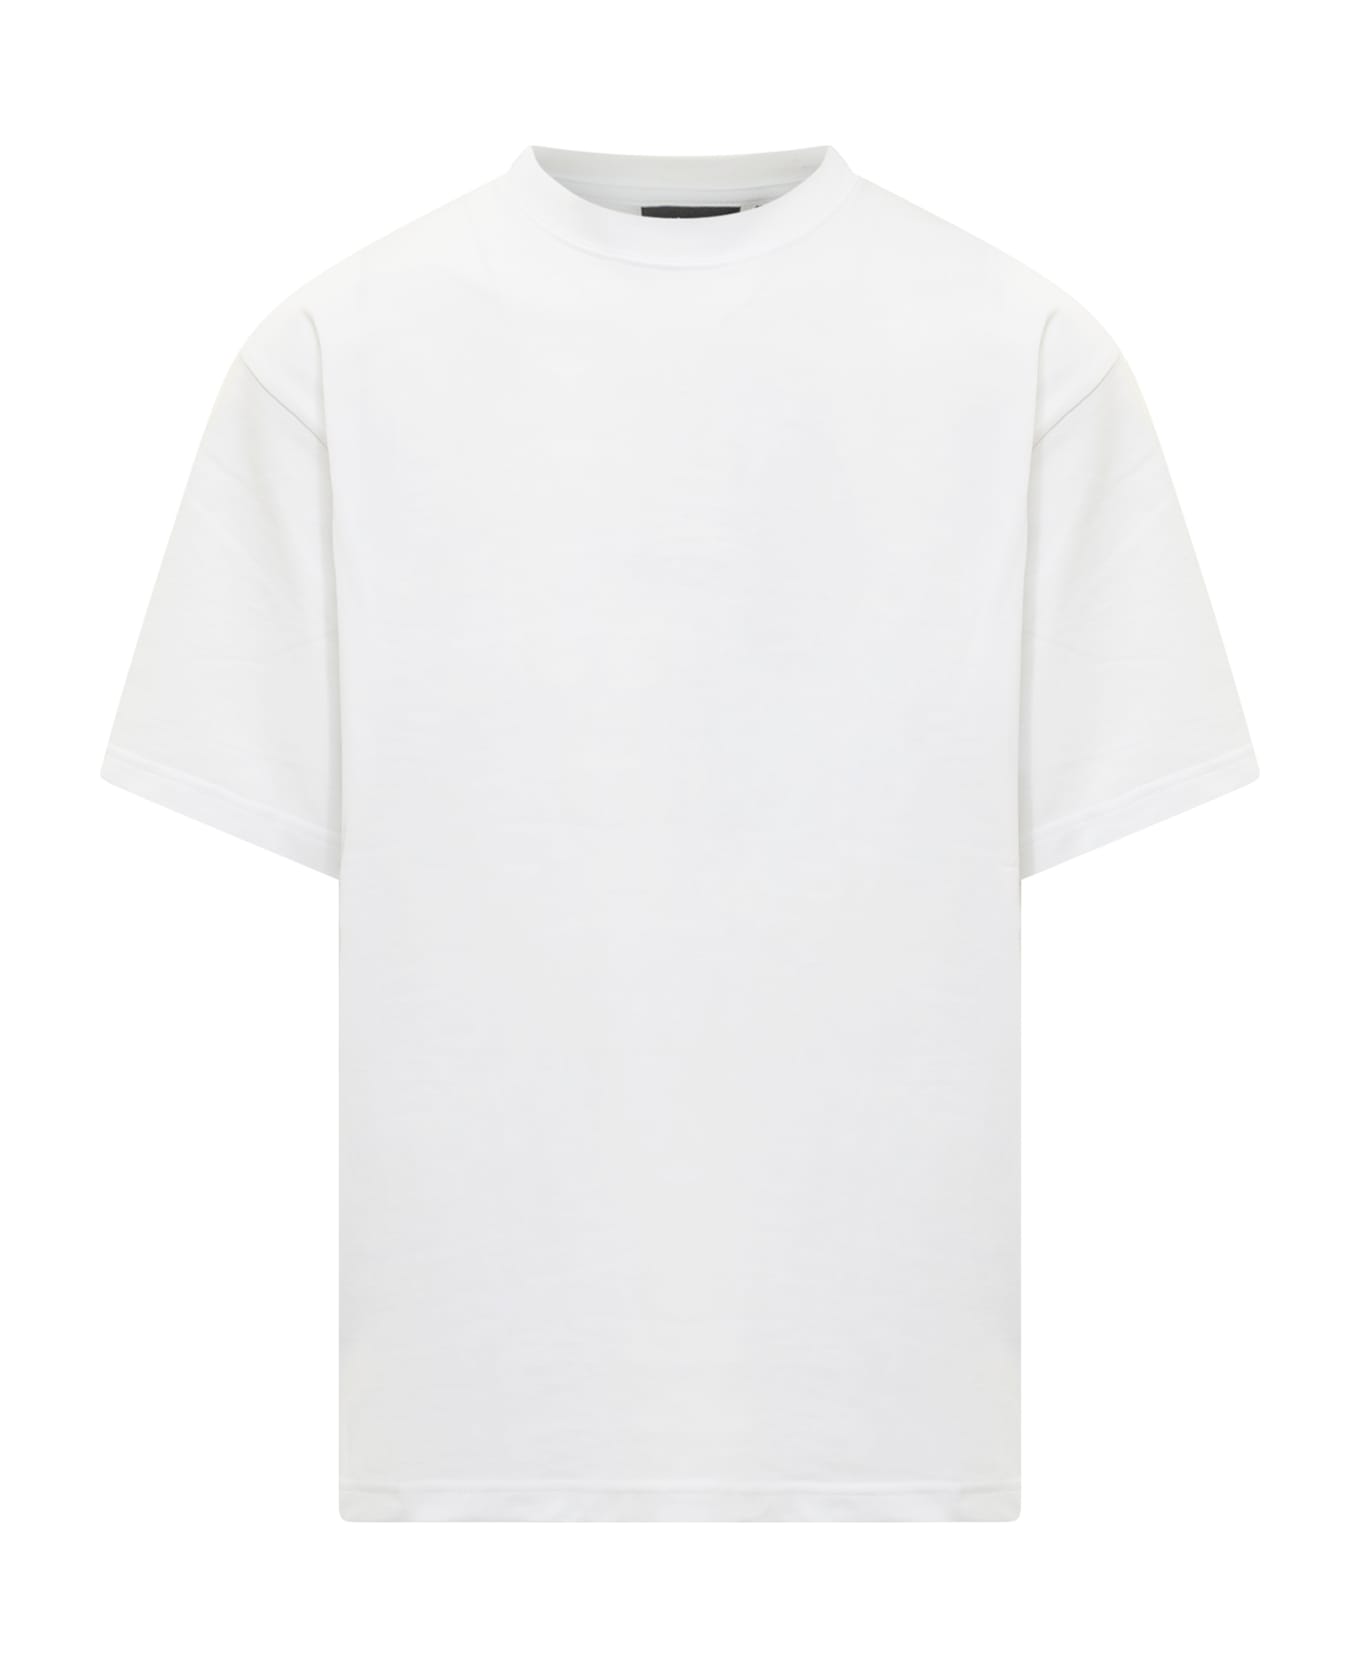 44 Label Group 44 T-shirt T-Shirt - WHITE